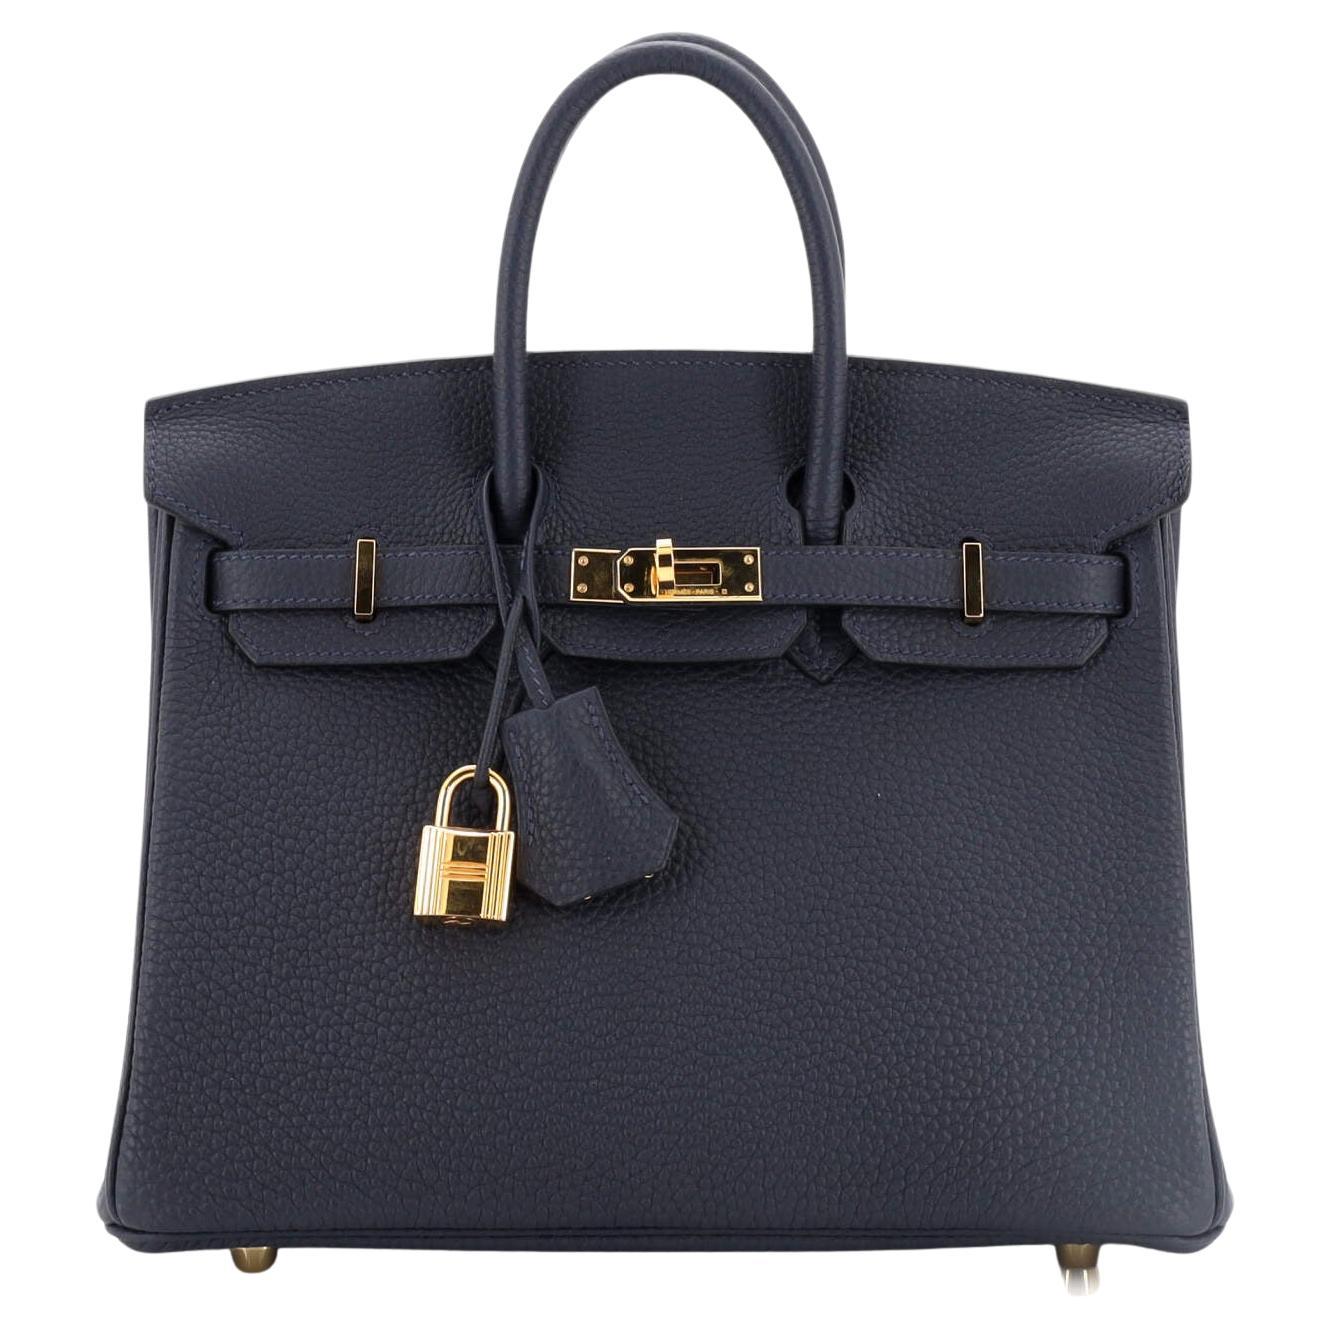 Hermes Birkin Handbag Caban Togo with Gold Hardware 25